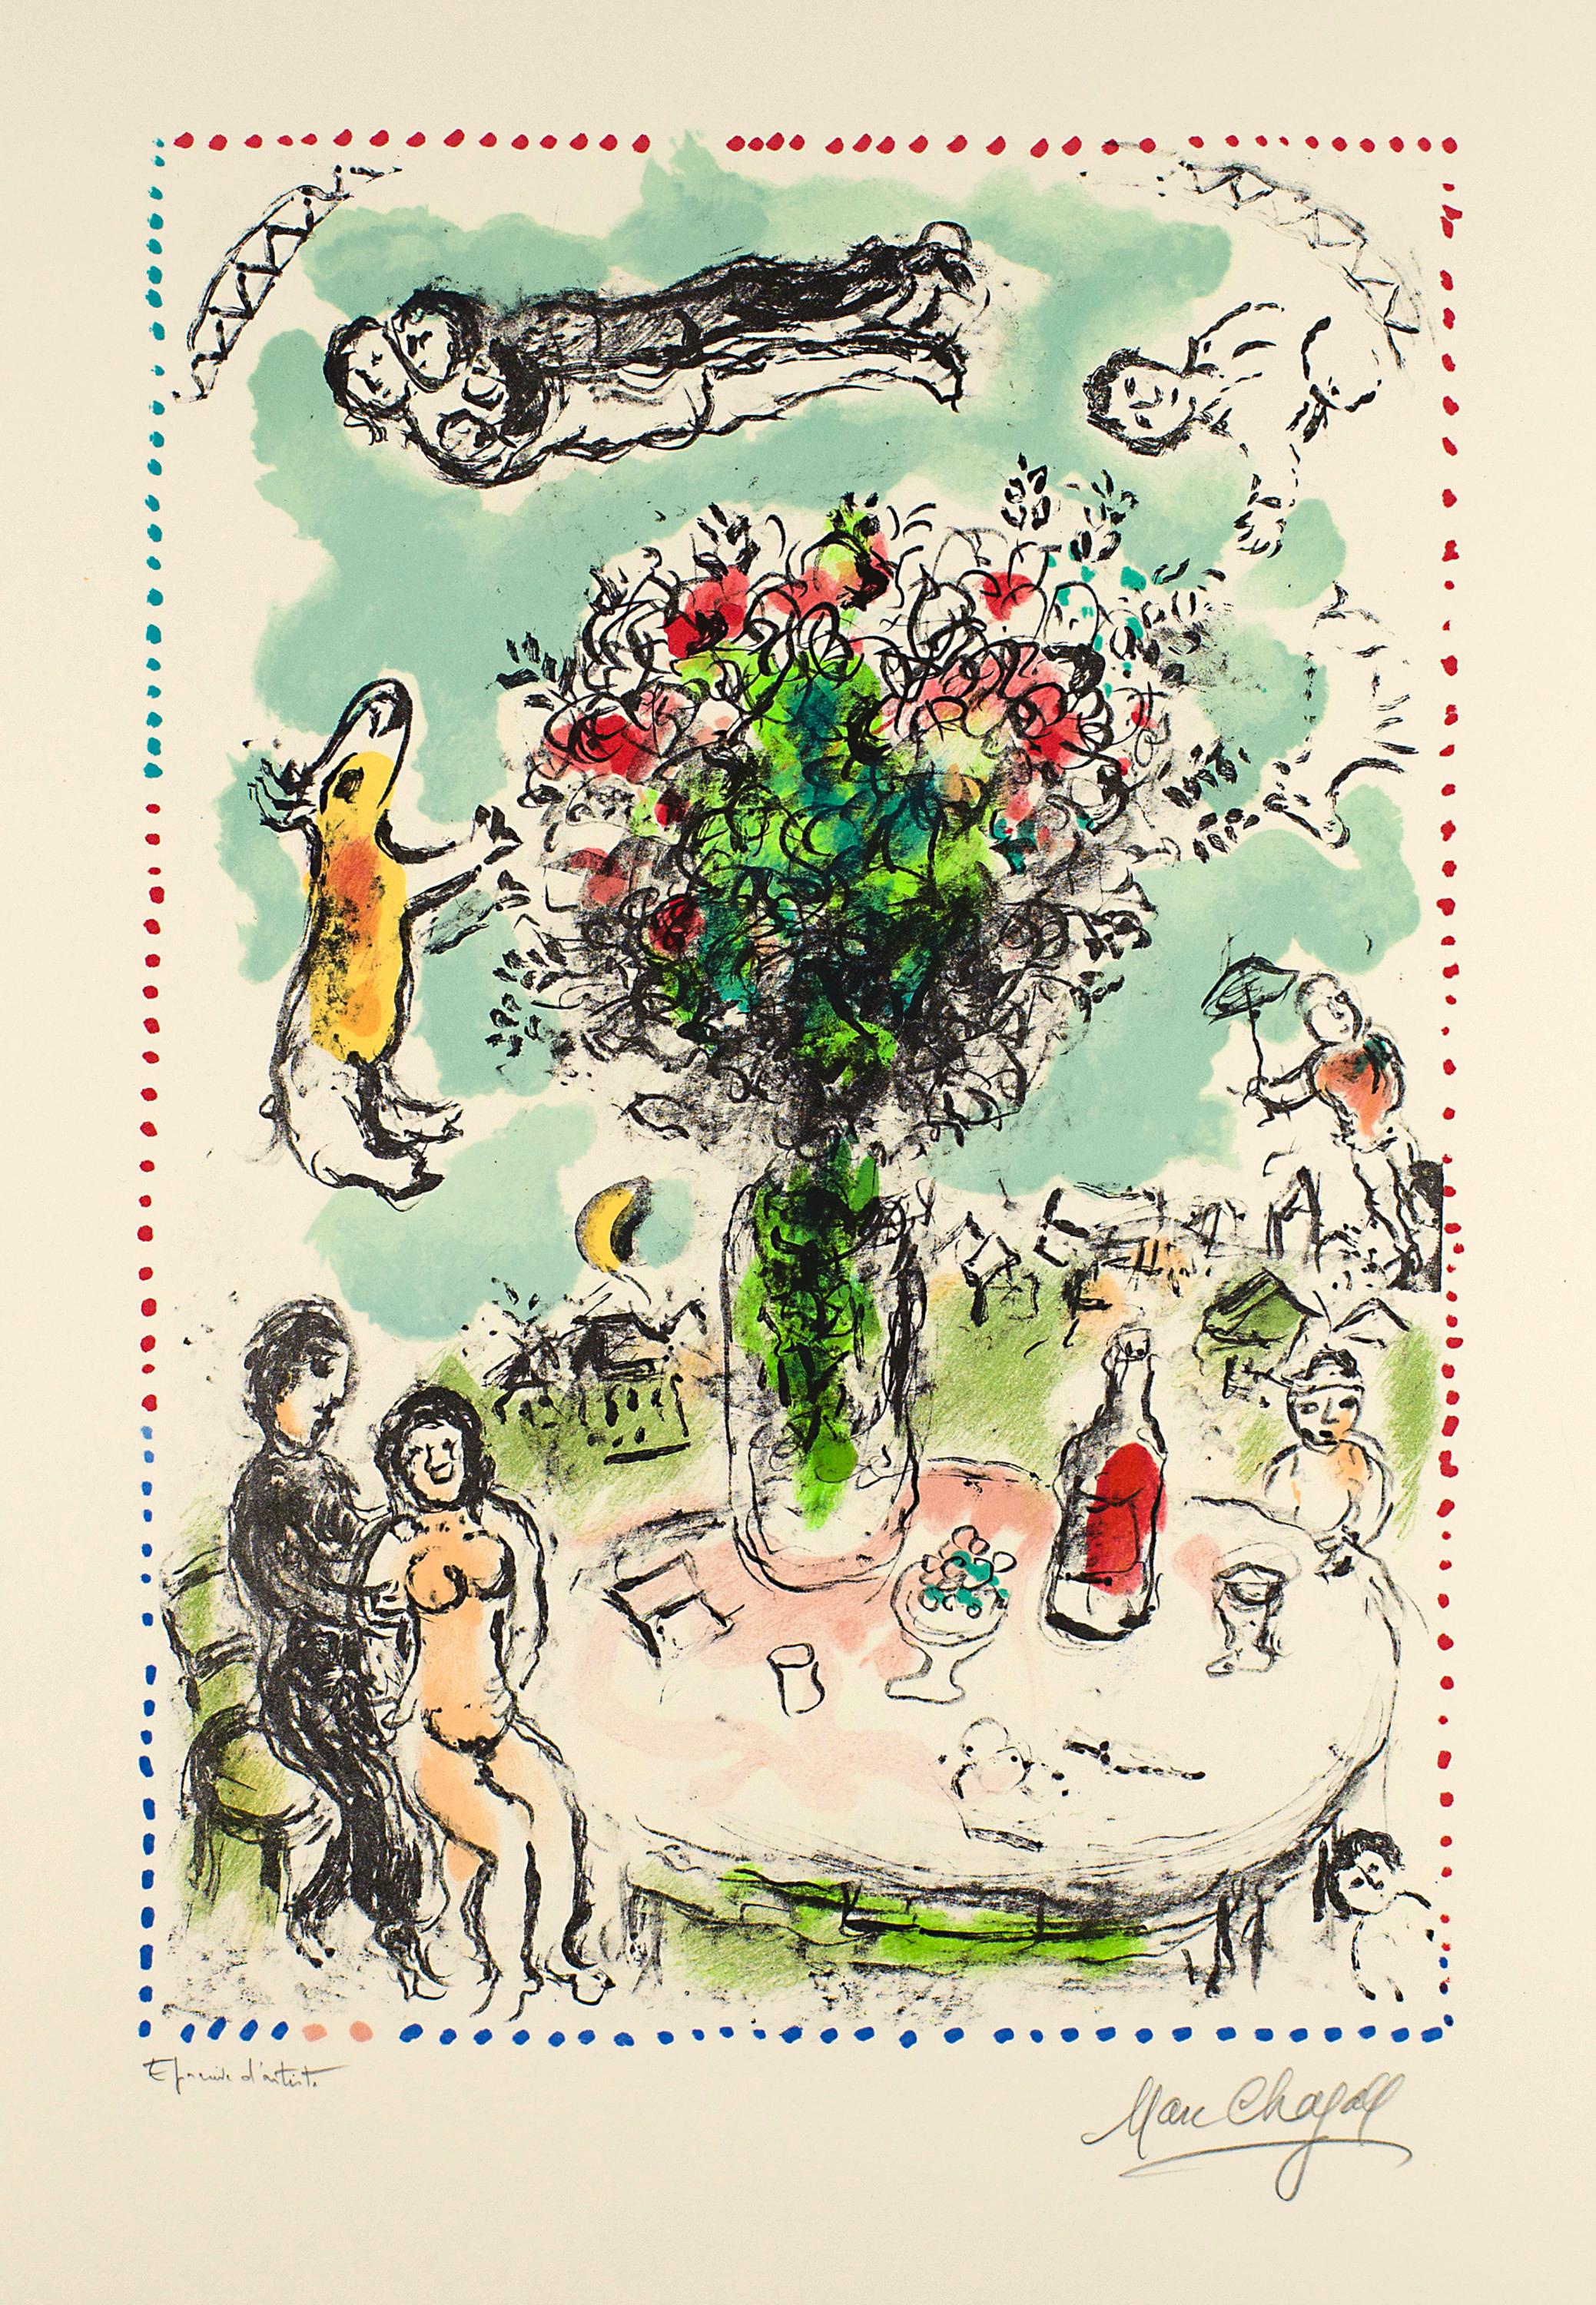 MARC CHAGALL (1887-1985)
“La Table des amant”
Colour lithograph, November 1983,
47x32 cm, image 65 x 47, 5 cm, sheet size 47 x 32 cm, image: 65 x 47, 5cm, sheet size.
Signature: Lower right signed by the artist in pencil
 “Marc Chagall”, left